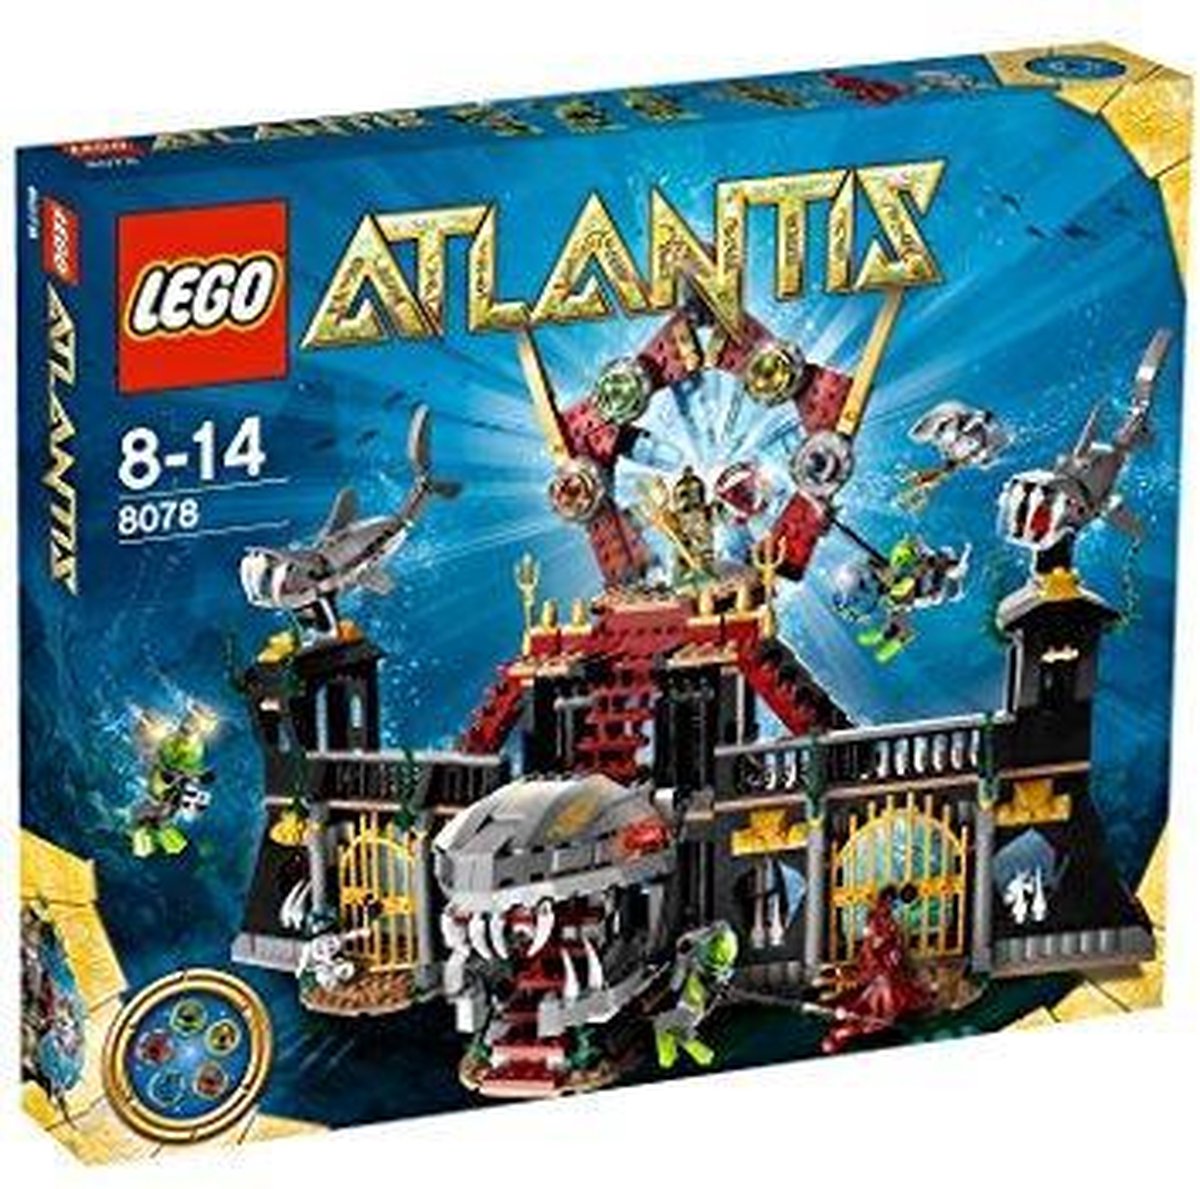 LEGO Atlantis Poort Naar Atlantis - 8078 | bol.com